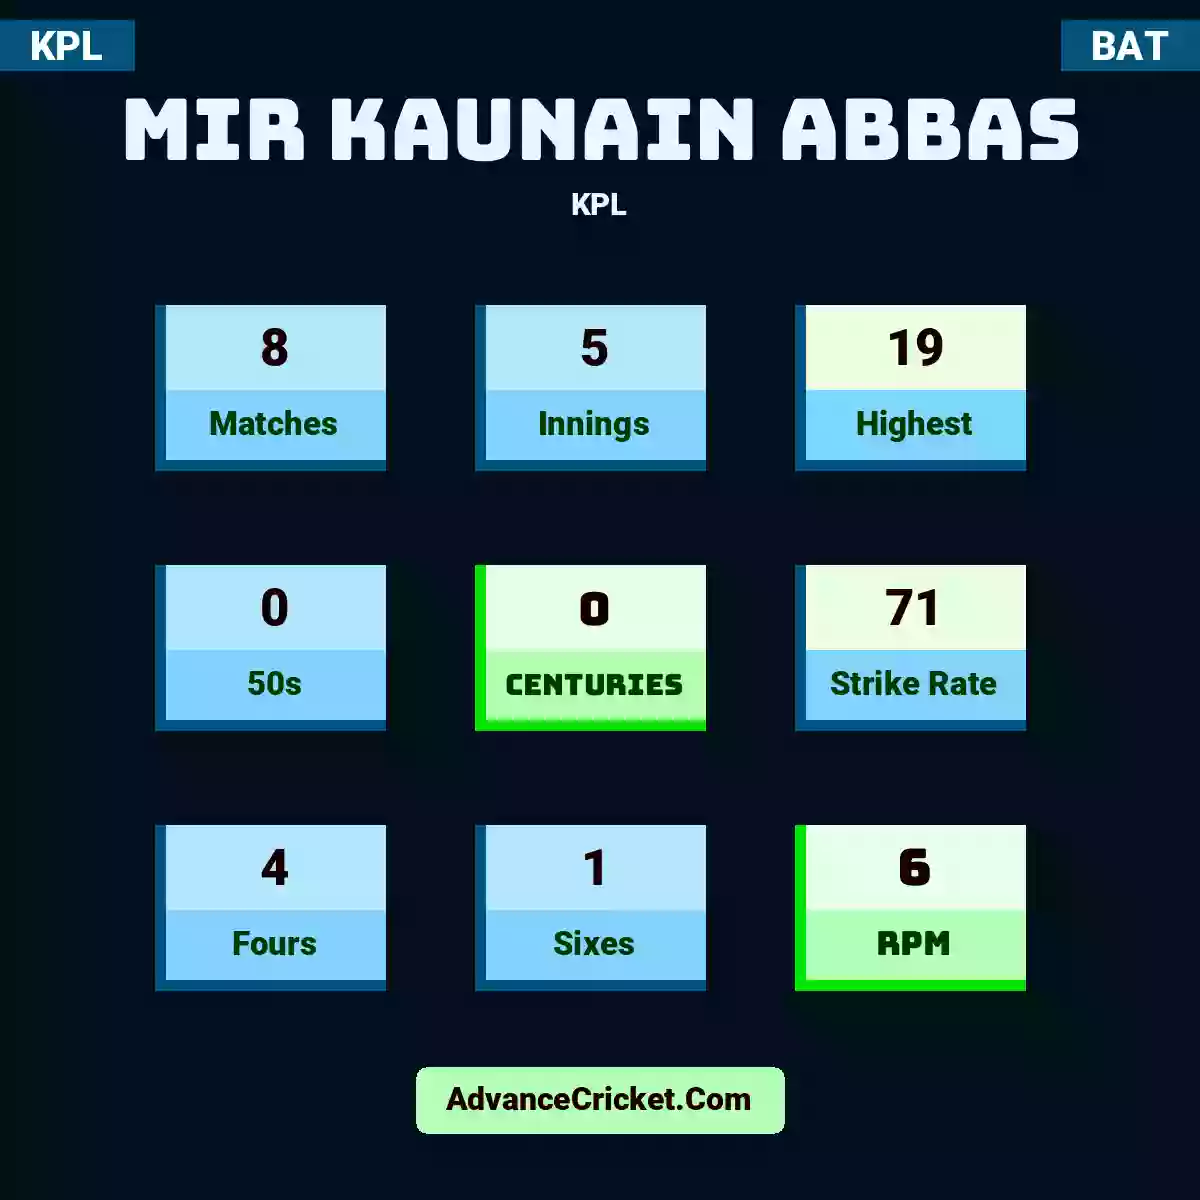 Mir Kaunain Abbas KPL , Mir Kaunain Abbas played 8 matches, scored 19 runs as highest, 0 half-centuries, and 0 centuries, with a strike rate of 71. M.Abbas hit 4 fours and 1 sixes, with an RPM of 6.